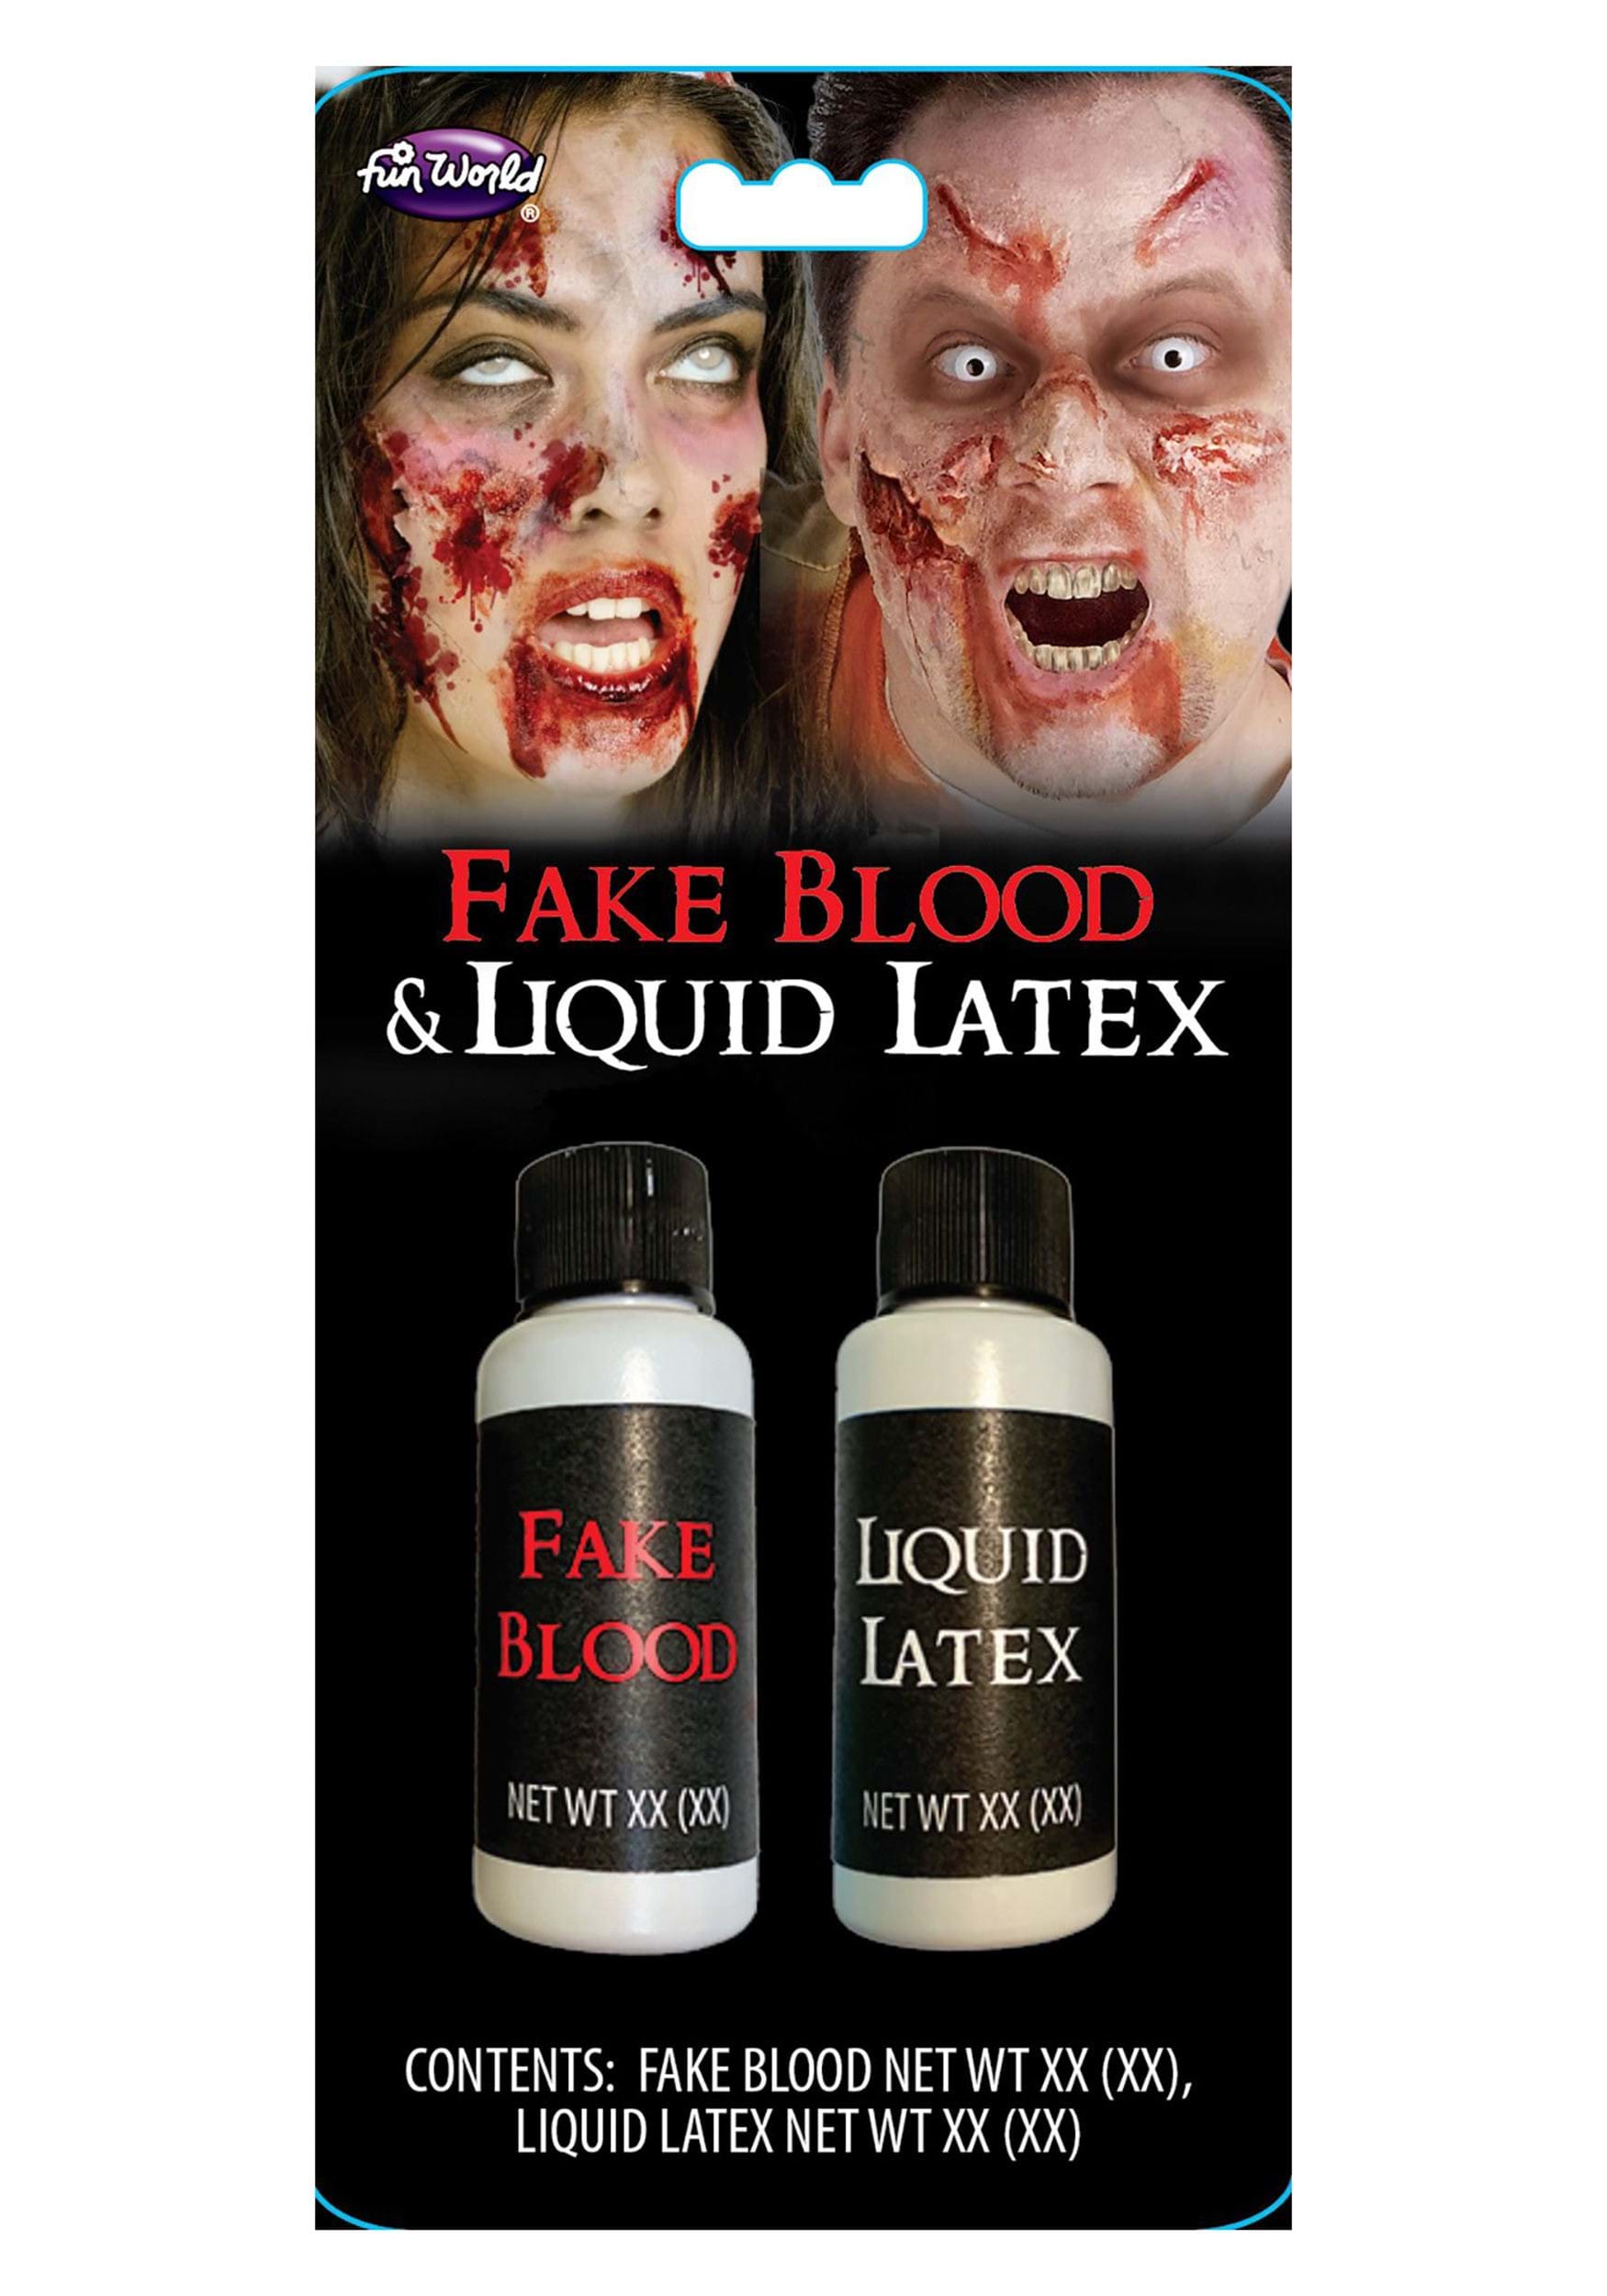 1 oz Blood & Liquid Latex Duo